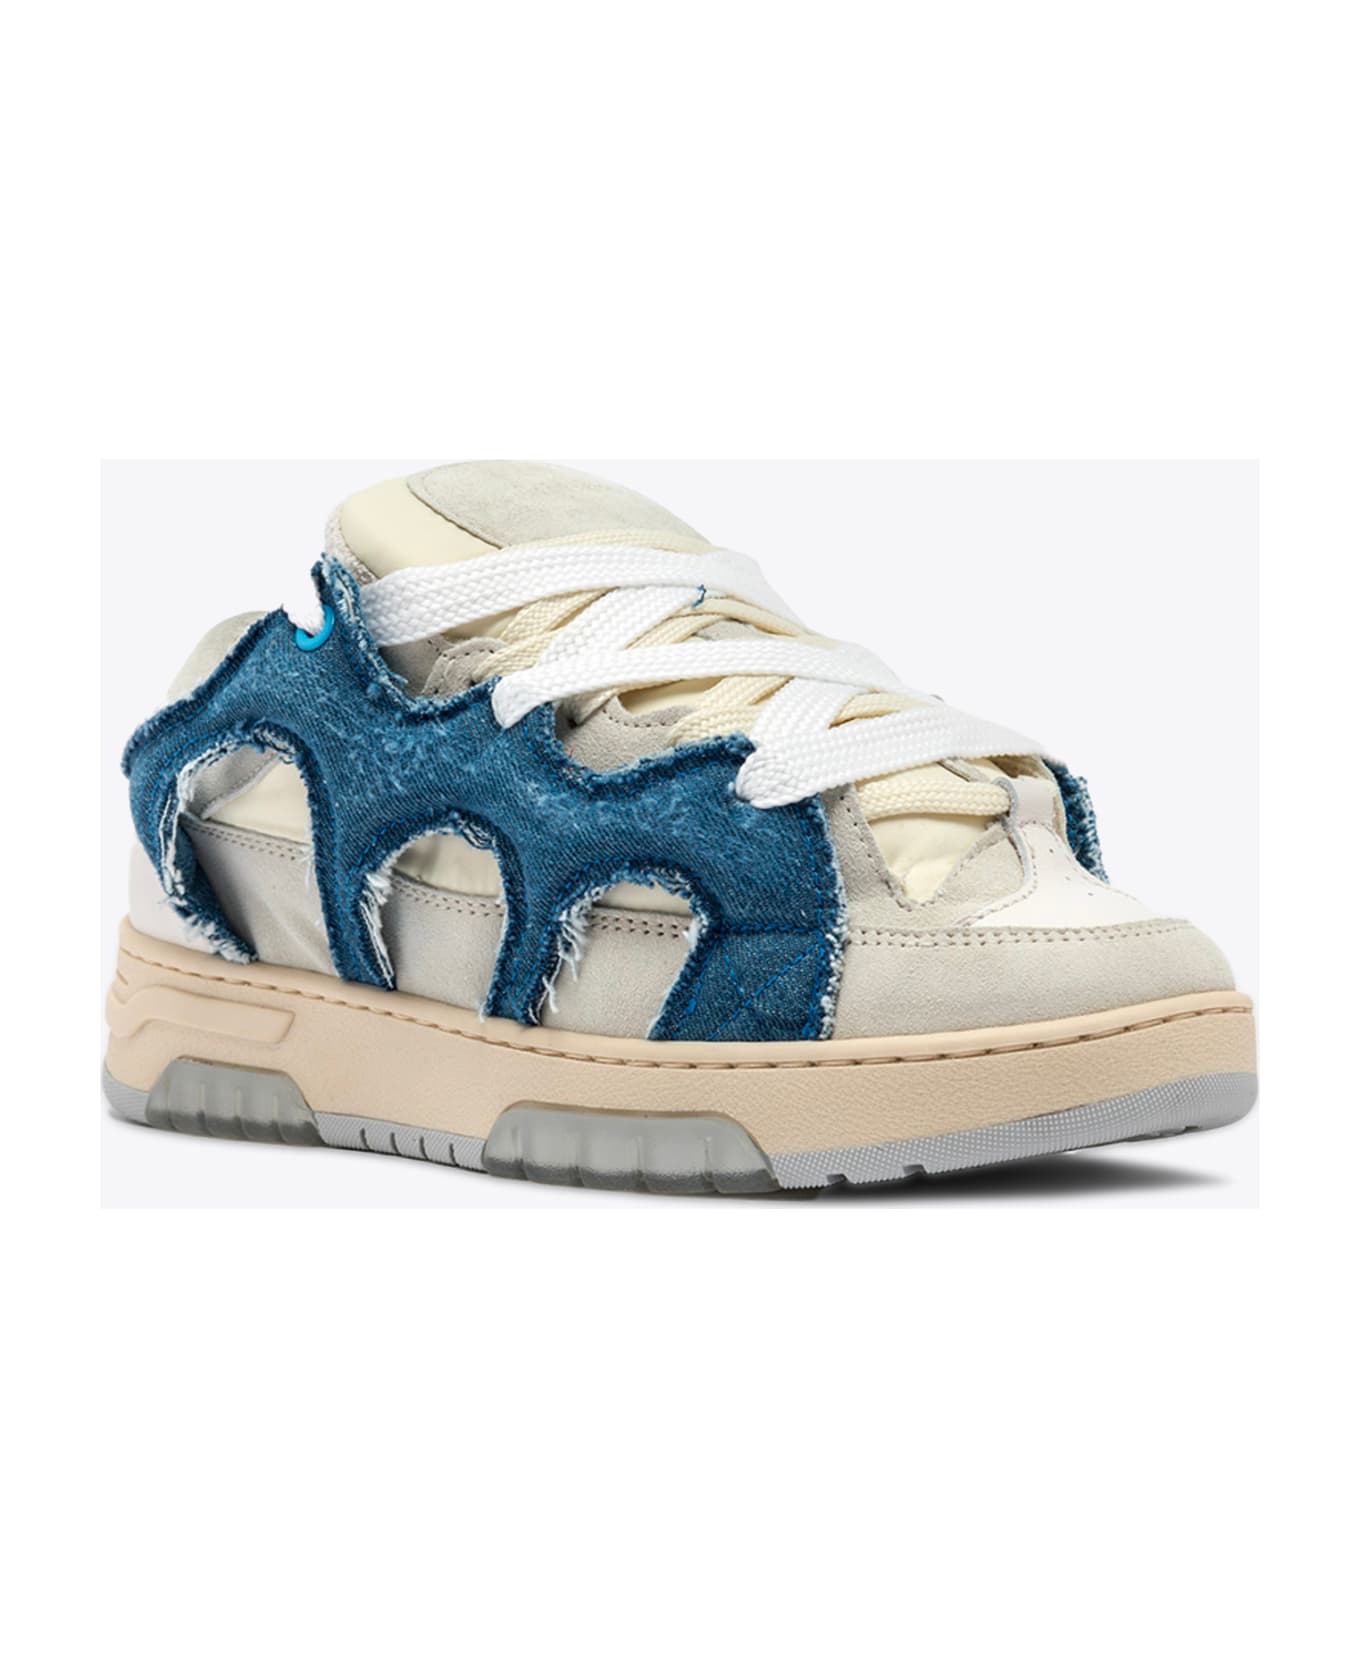 Paura Santha 1 Off white suede and blue denim low sneaker - Denim